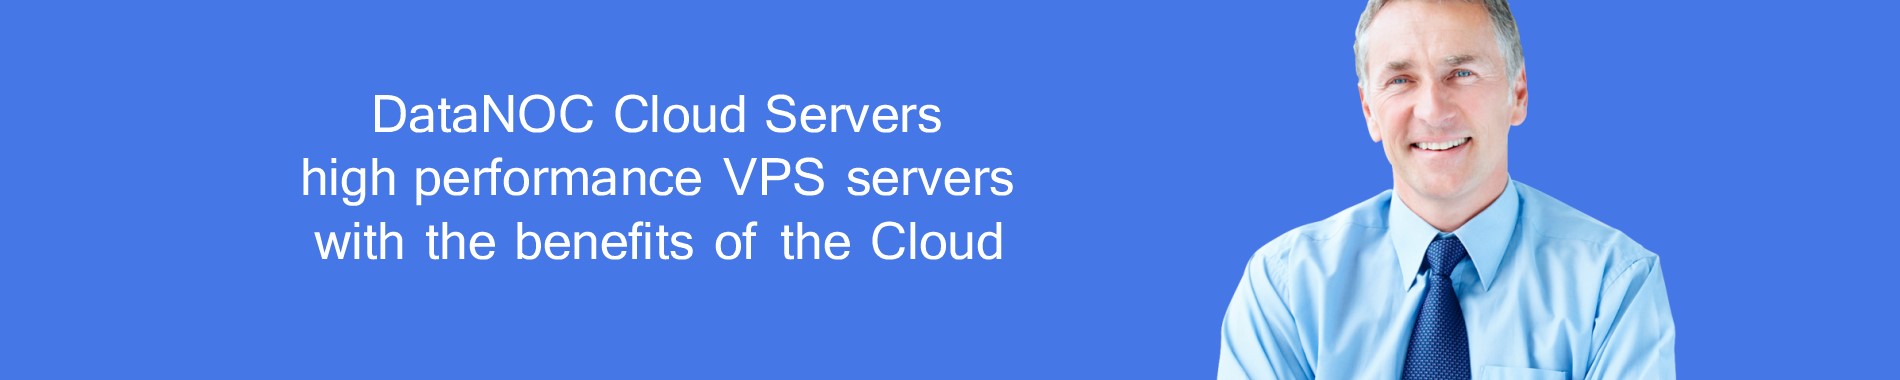 Datanoc Cloud servers